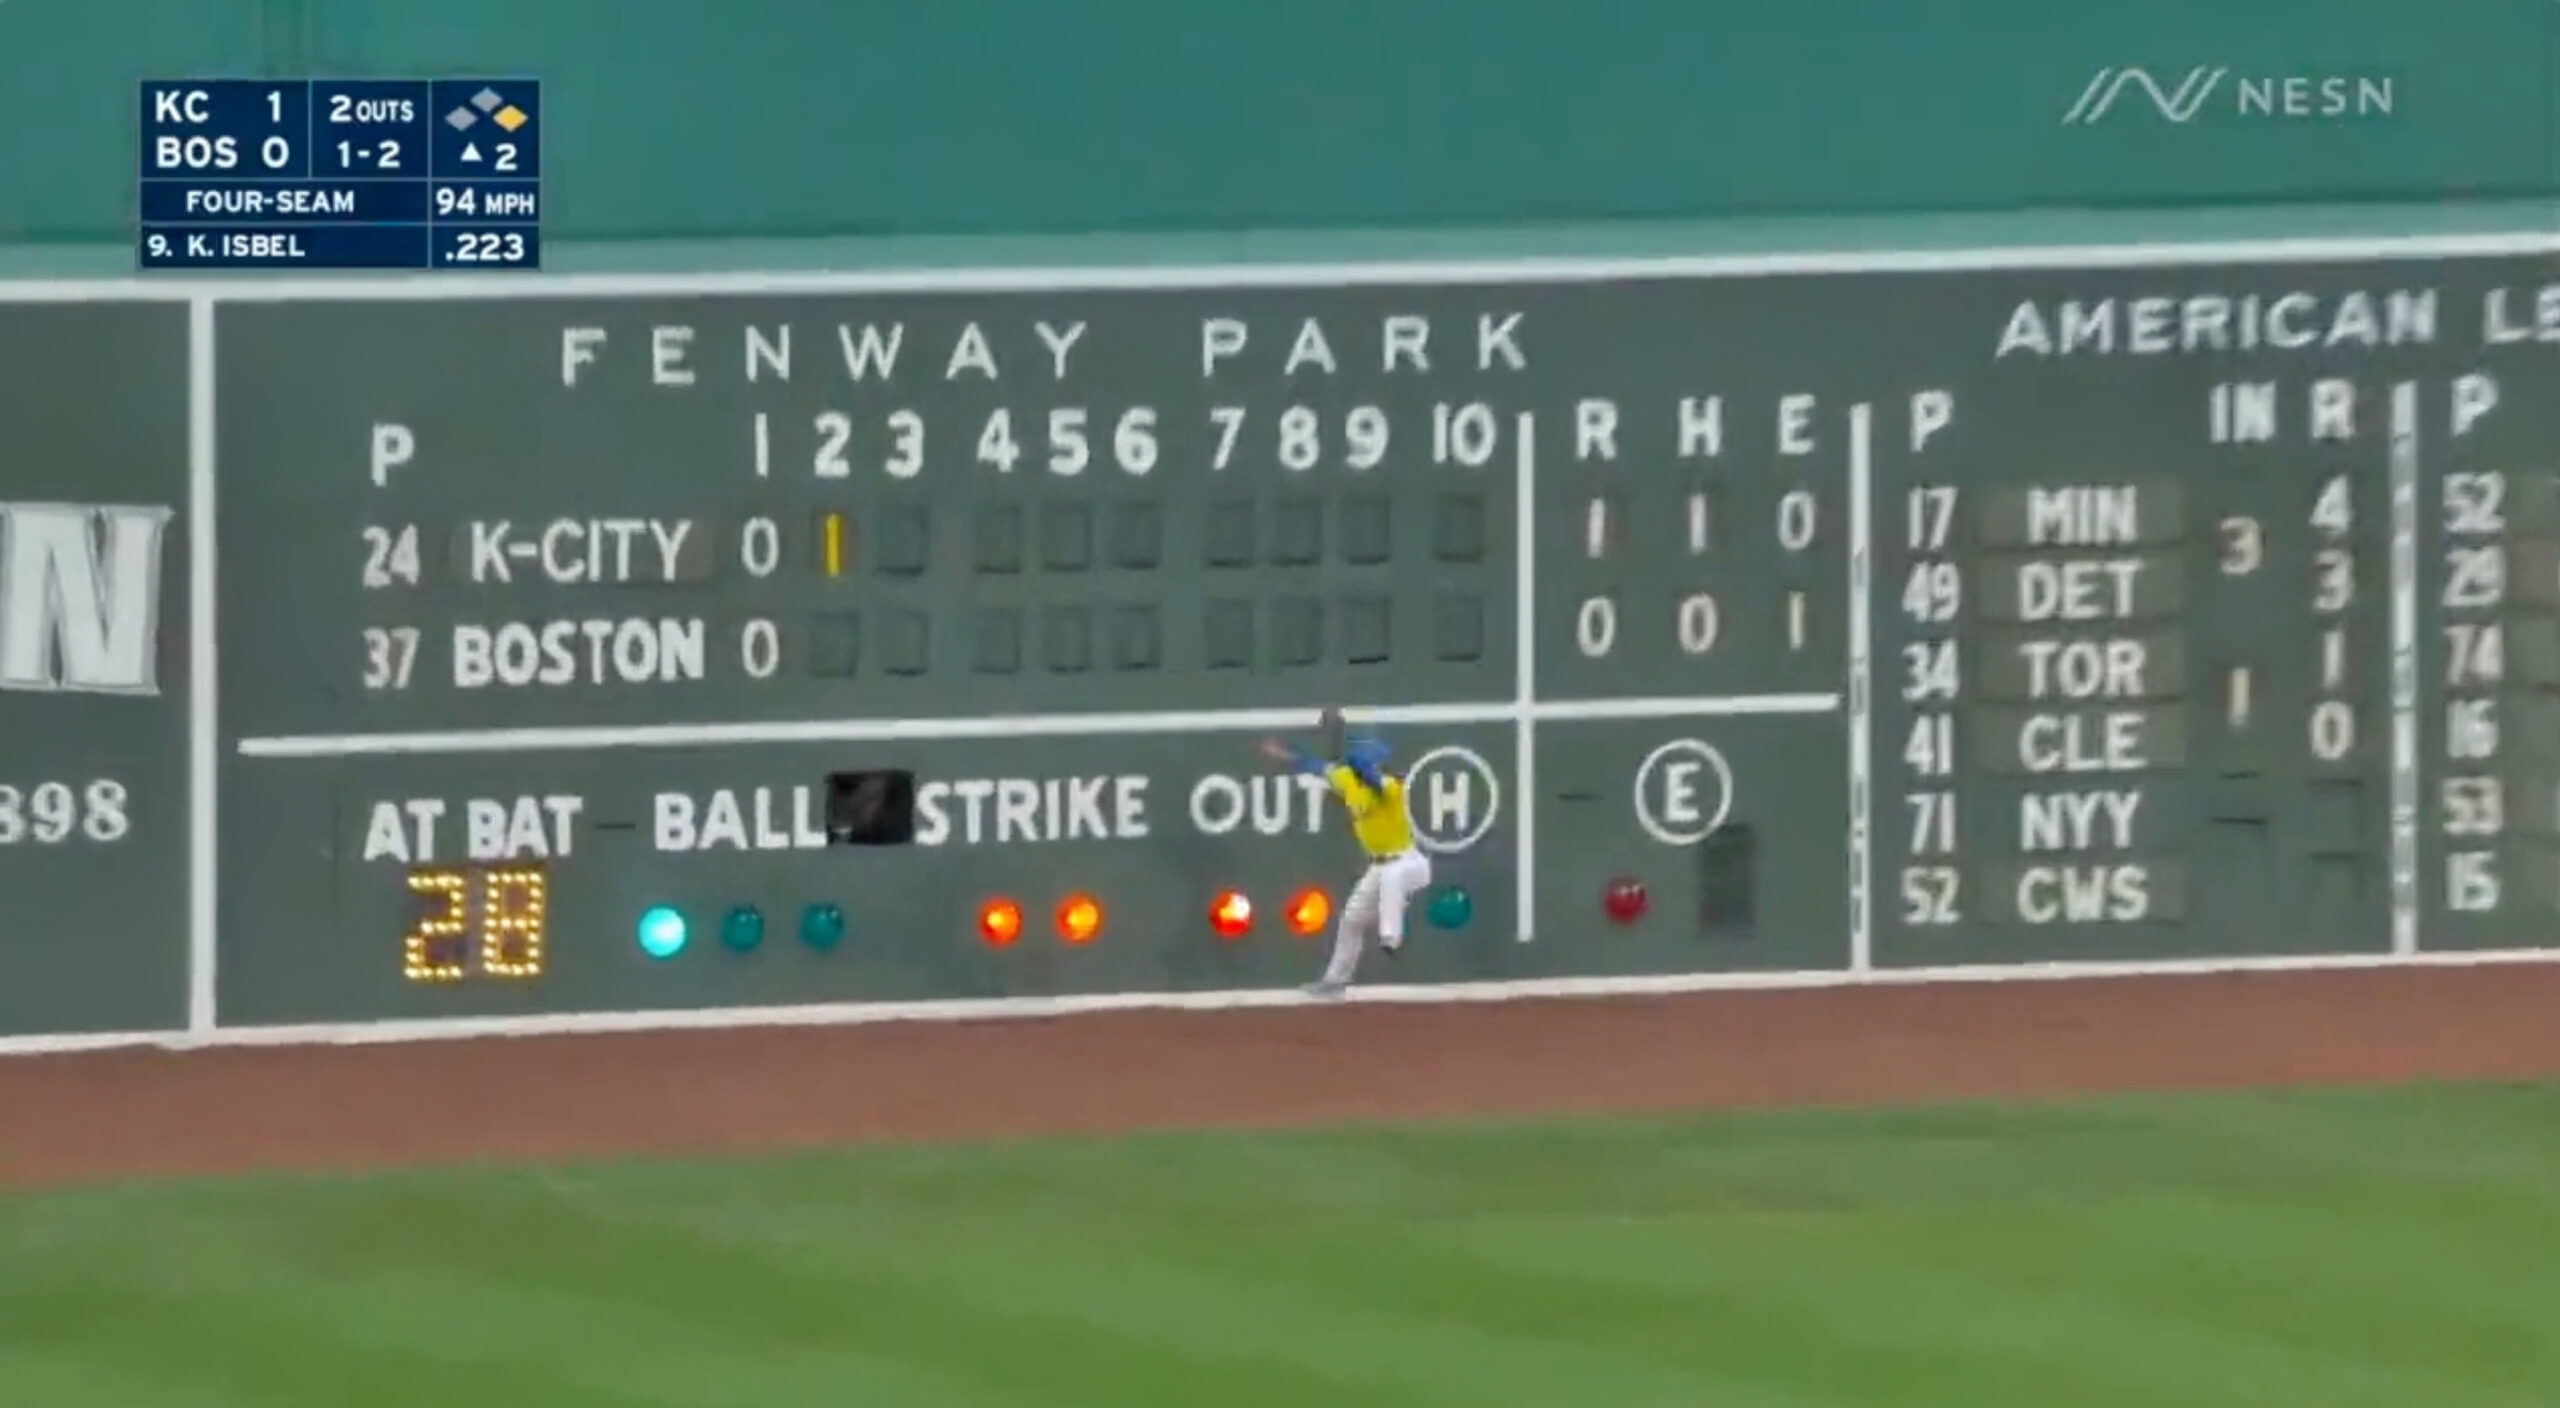 Ball gets stuck in light of Fenway Park's Green Monster scoreboard